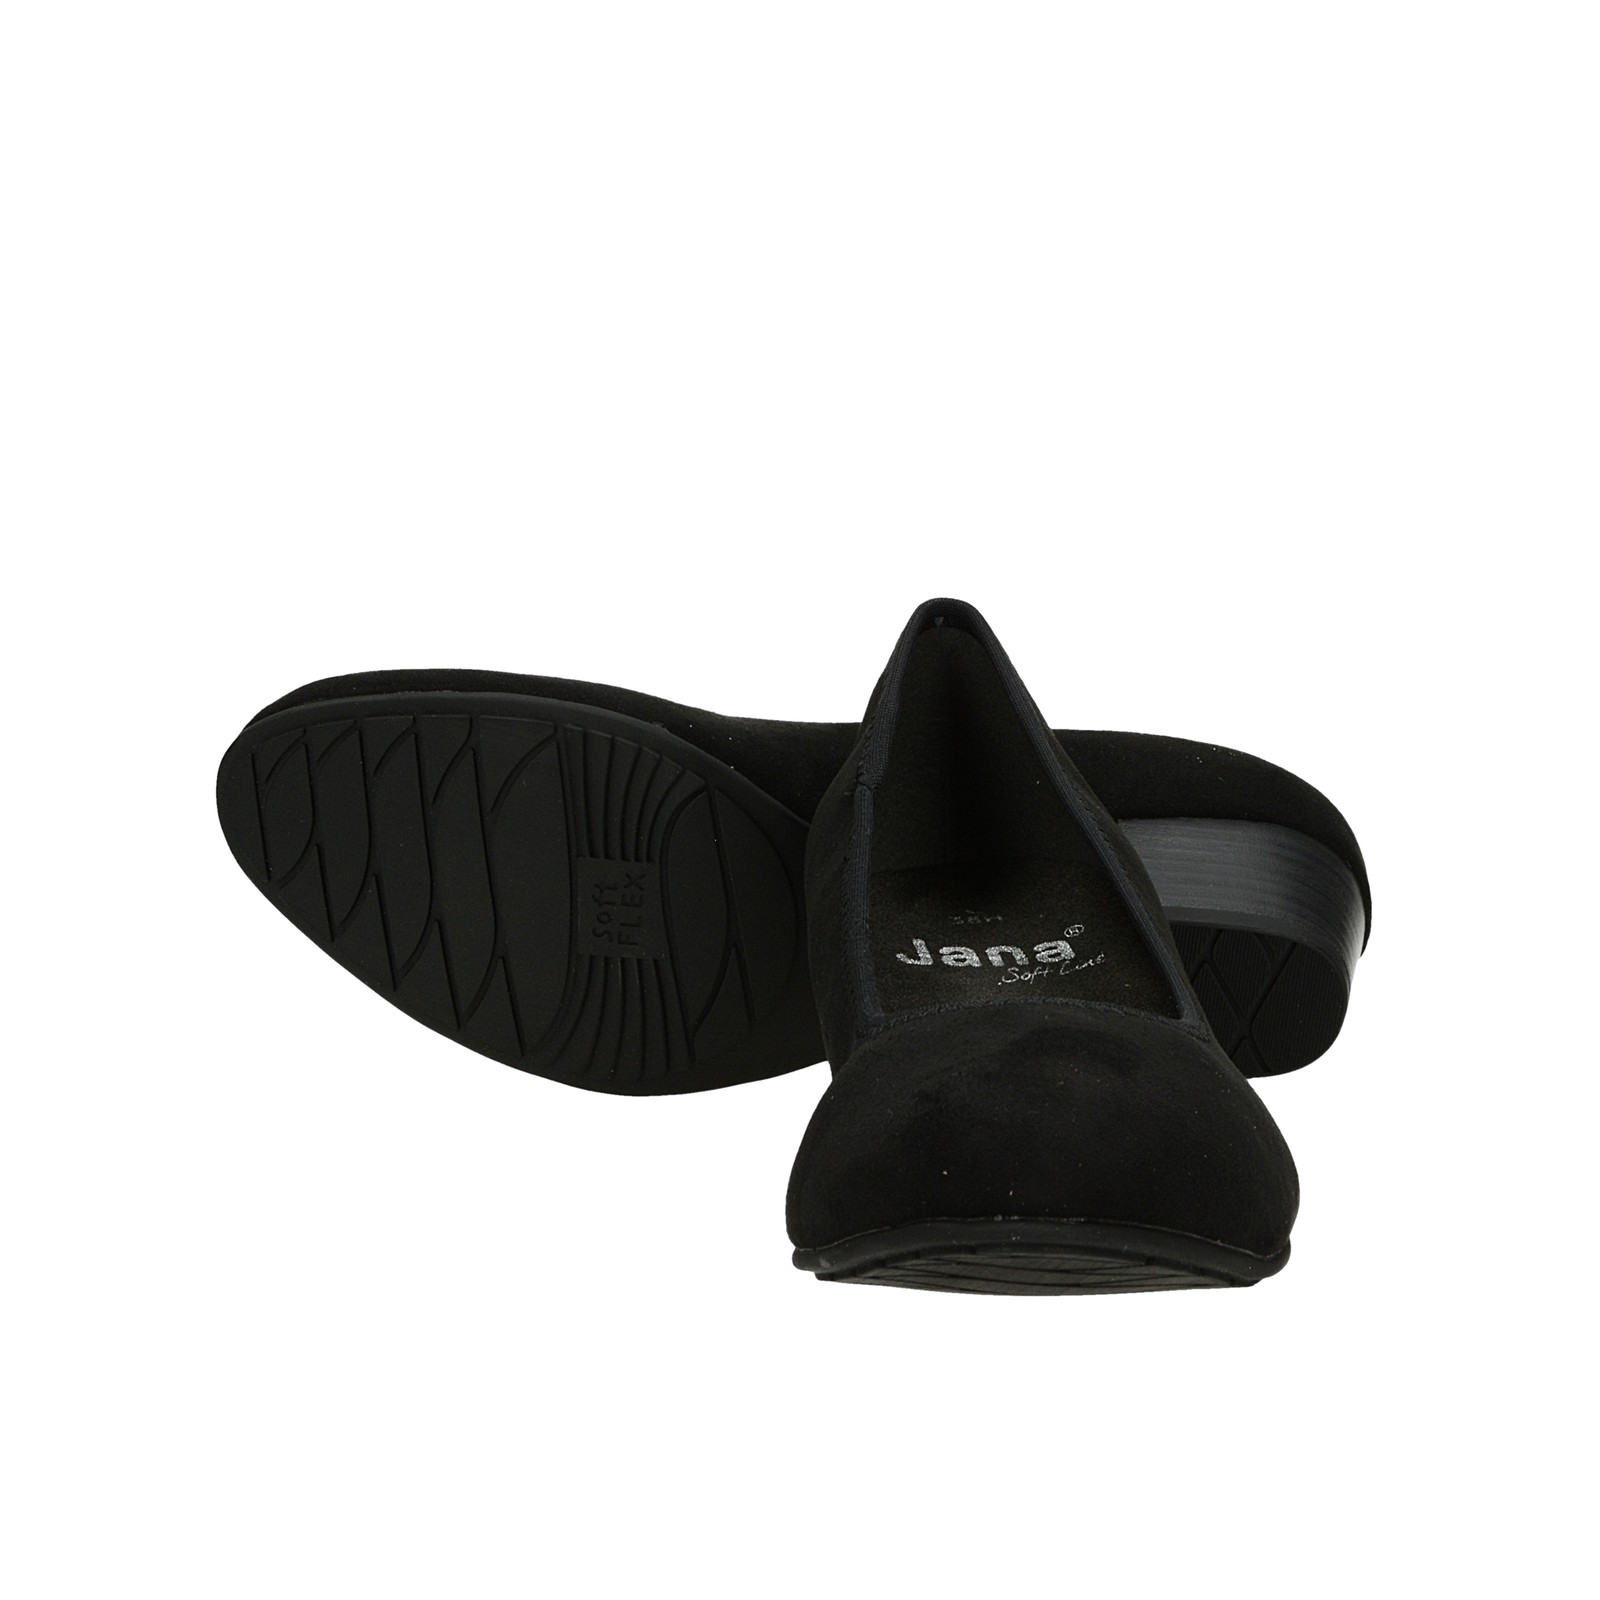 Vintage Black Sequins and Beads High Heels Approx 2 1/2 inch heels | Heels,  Black sequins, Gorgeous shoes